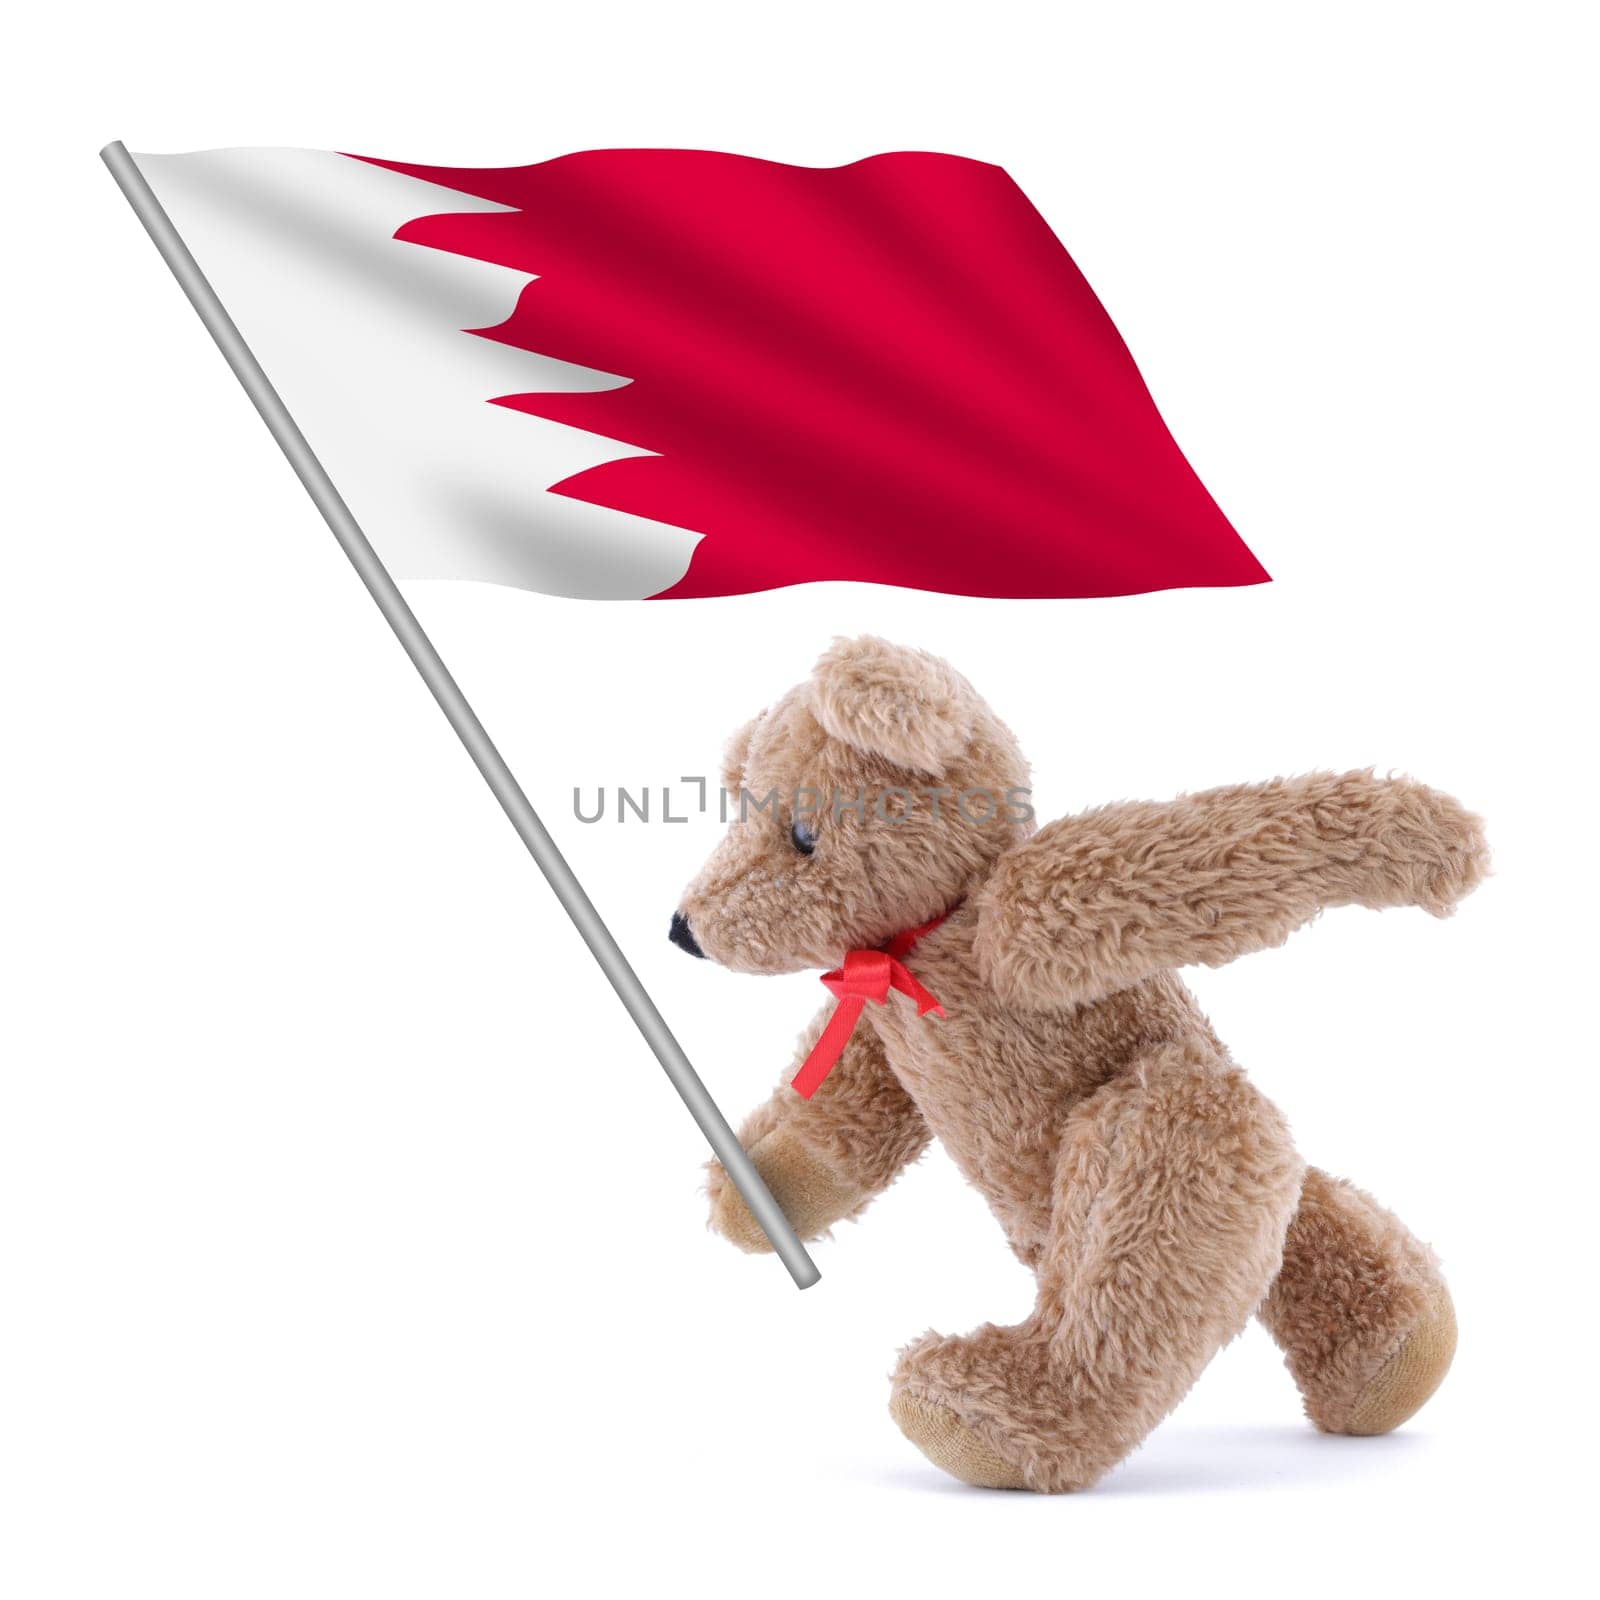 A Bahrain flag being carried by a cute teddy bear